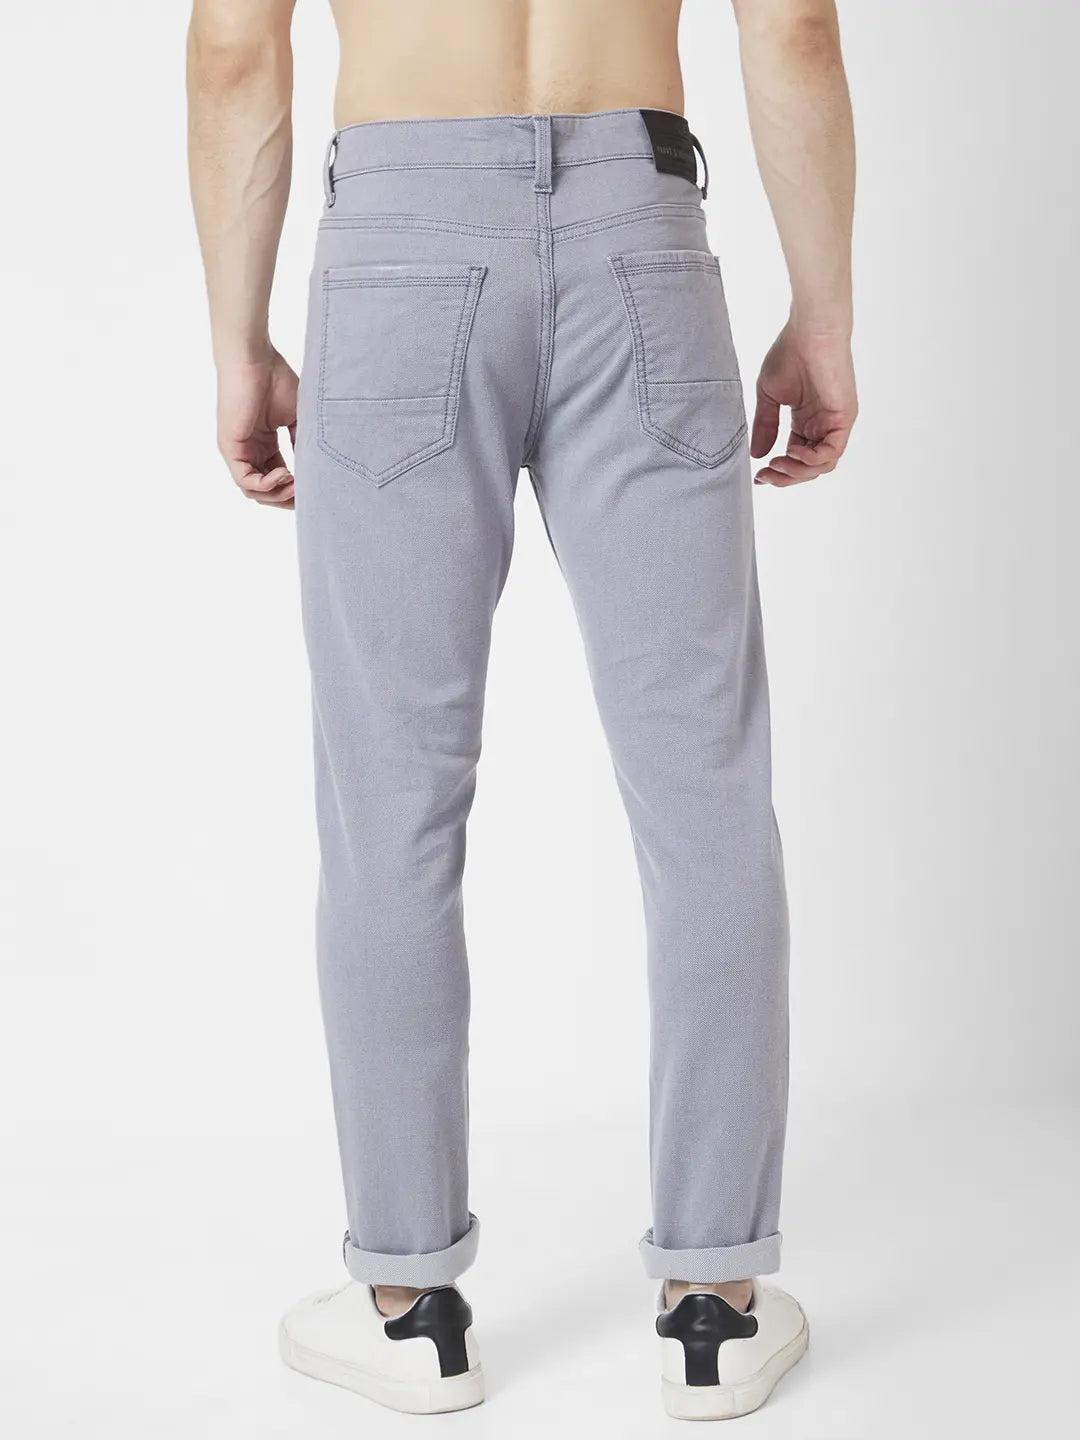 Spykar Men Grey Cotton Slim Fit Narrow Length Clean Look Low Rise Jeans (Skinny)